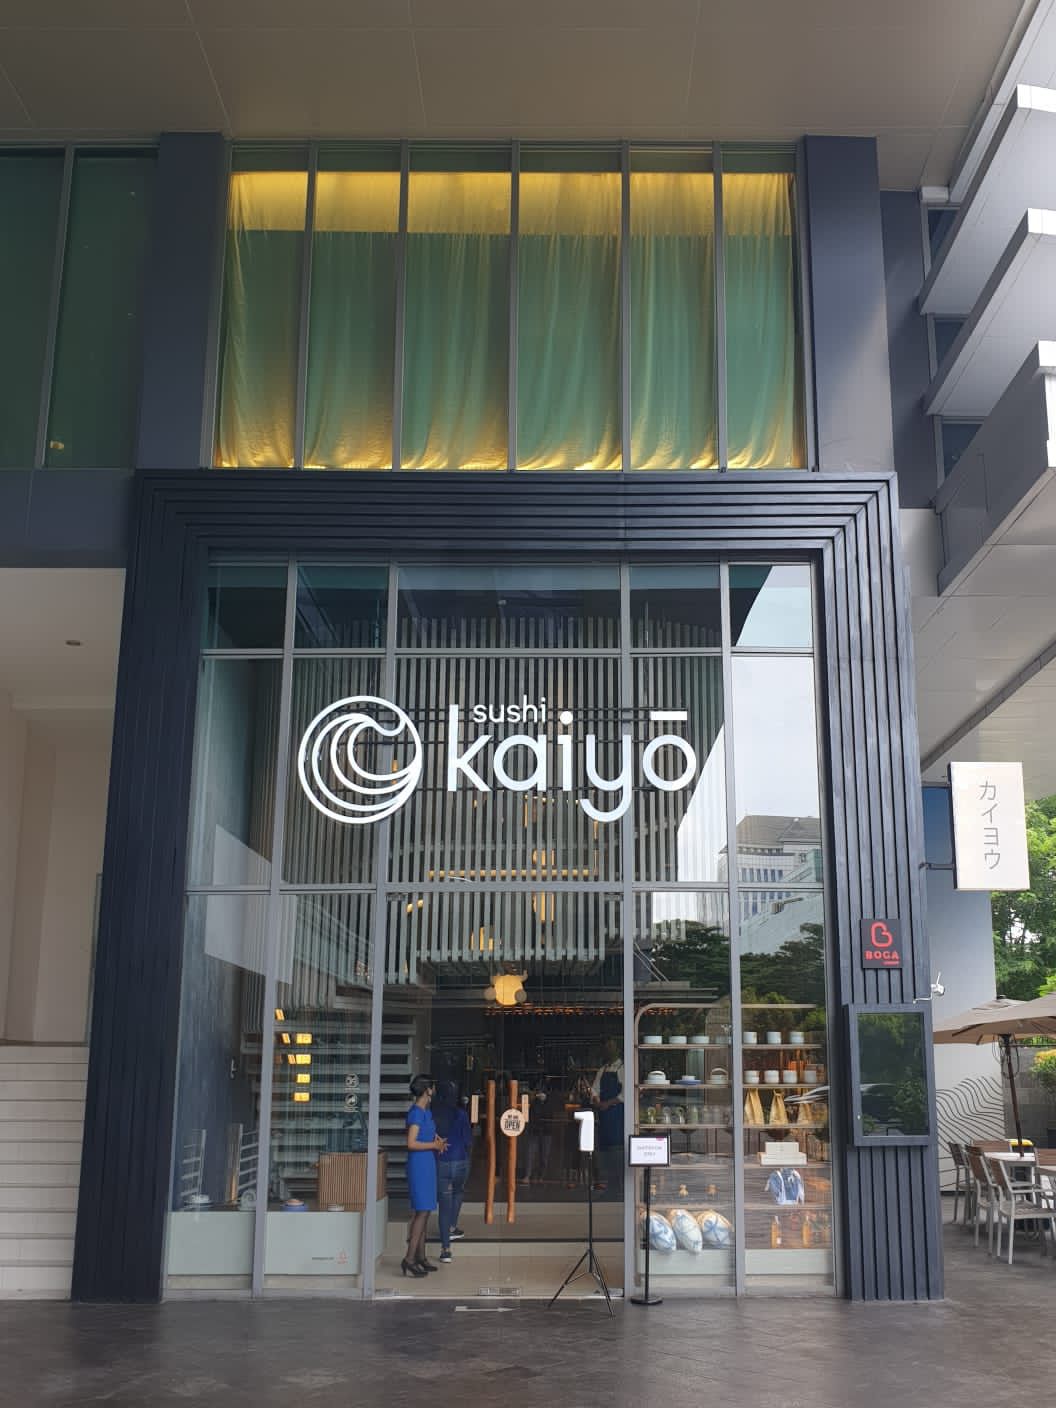 Sushi Kaiyo shop front in lippo mall puri st. moritz